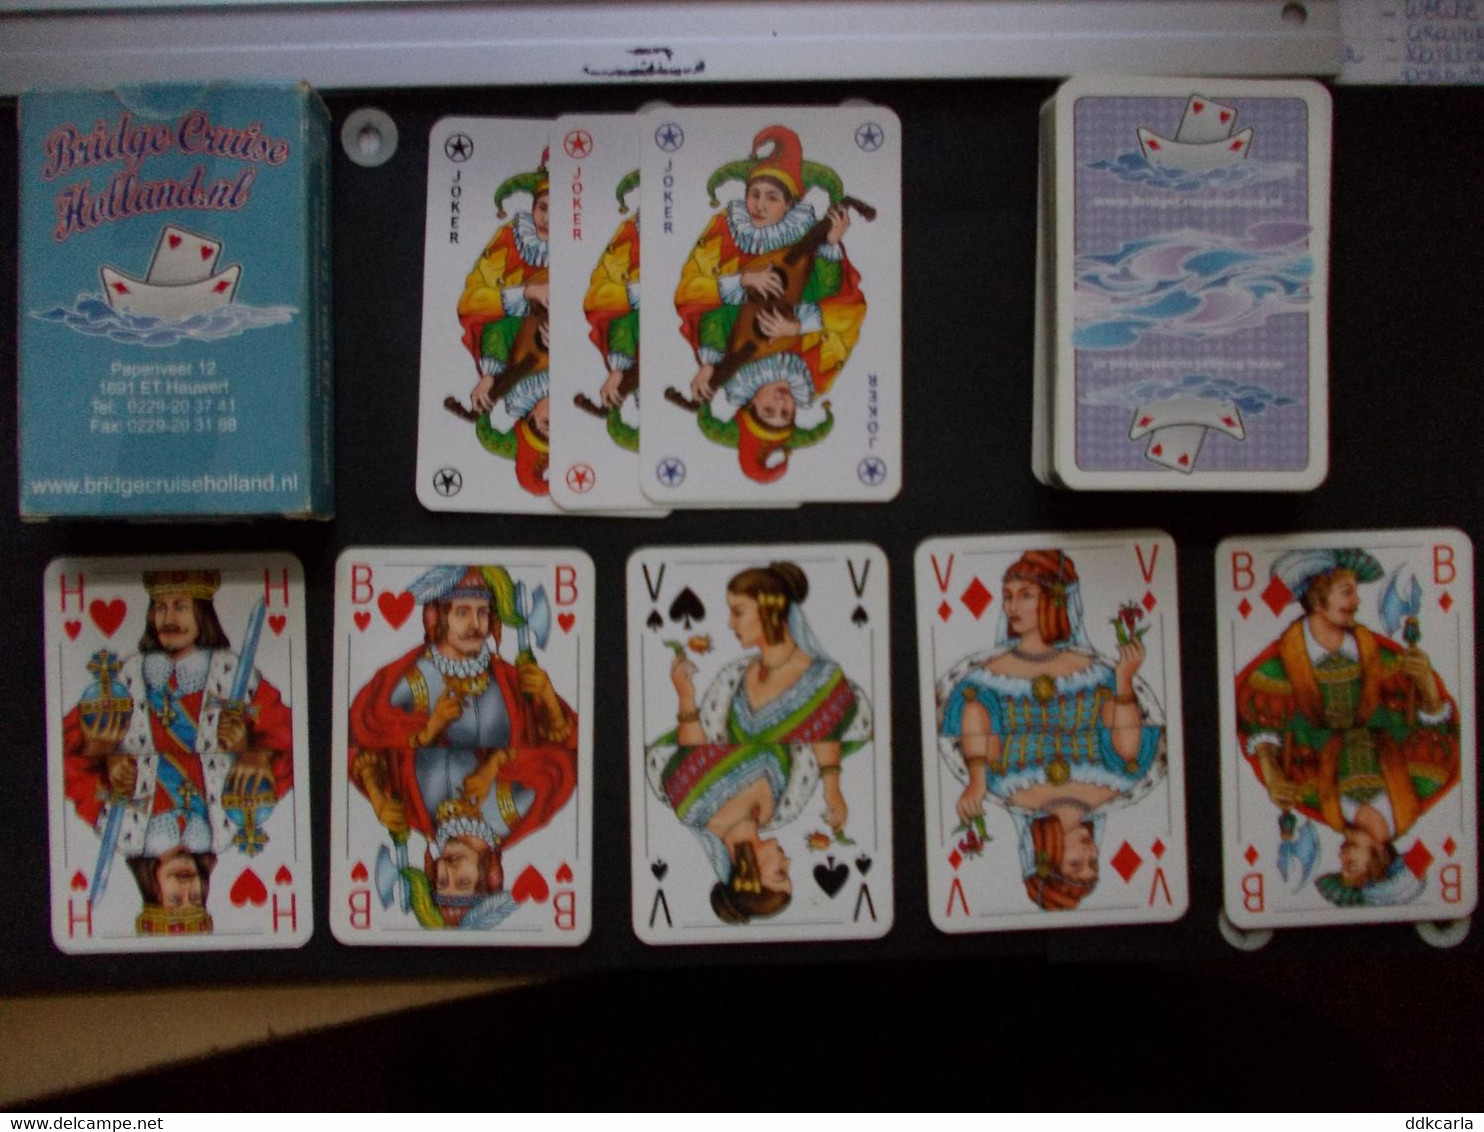 Speelkaarten - Jeu Des Cartes - Bridge Cruise Holland.nl - 52 Kaarten + 3 Jokers - 54 Cartas